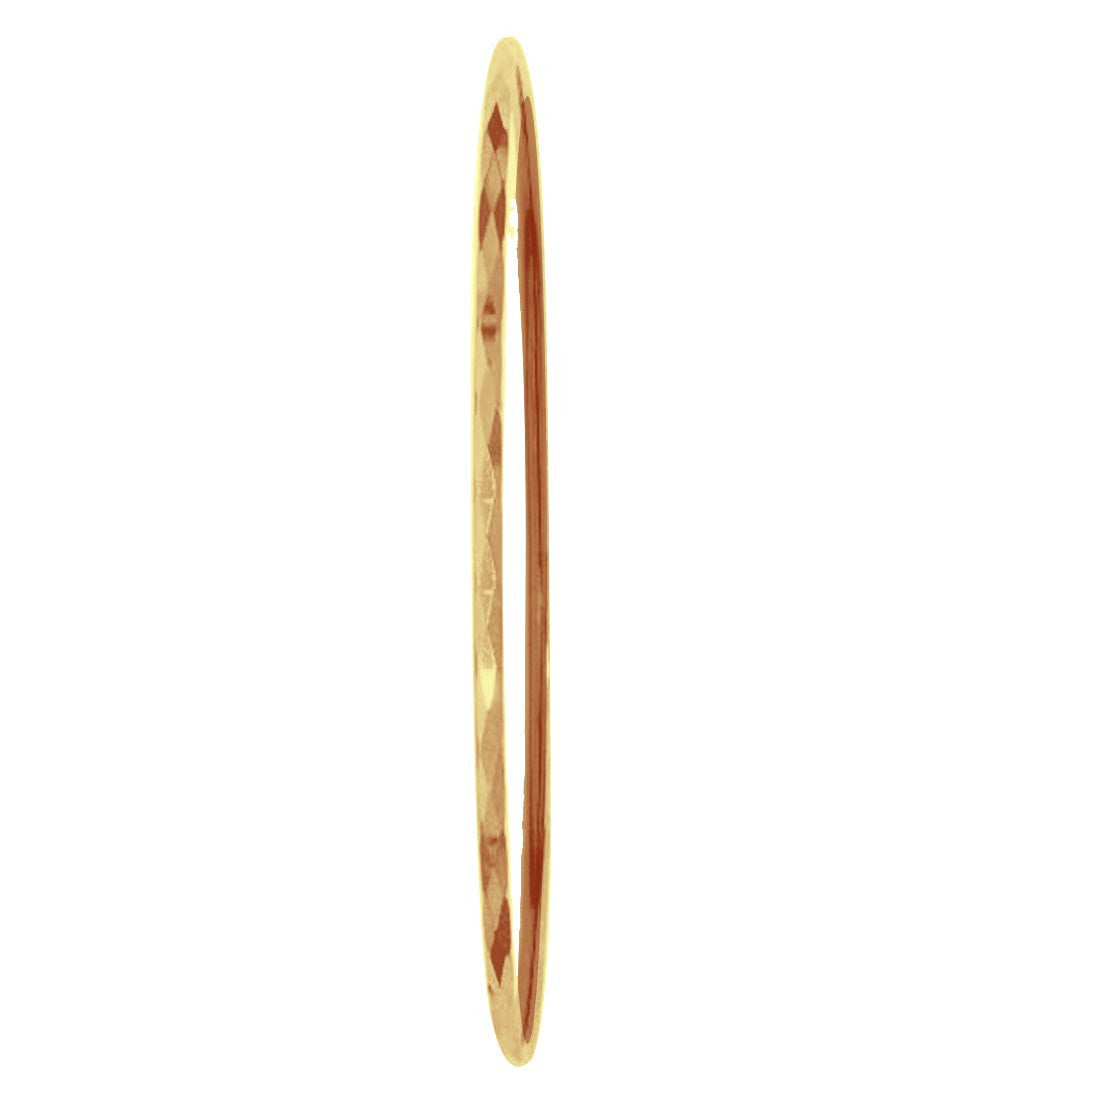 Aro tubo facetado Oro 10k, 7 cm de Diámetro, Ancho 2 mm - Infiniti Joyas